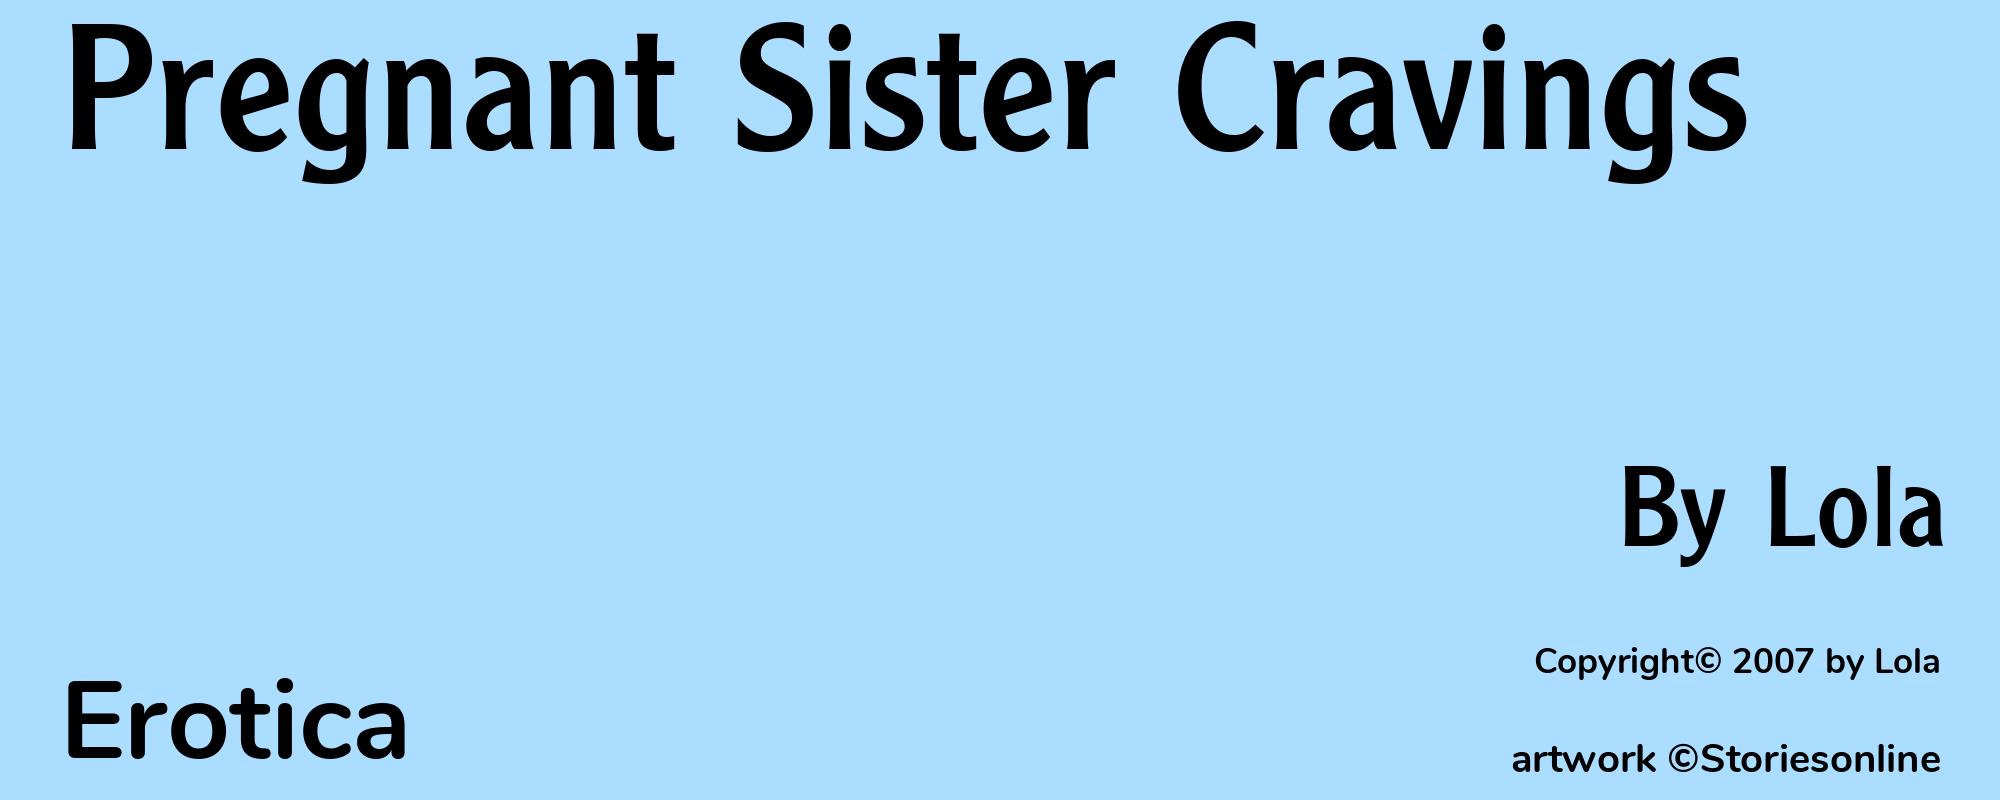 Pregnant Sister Cravings - Cover